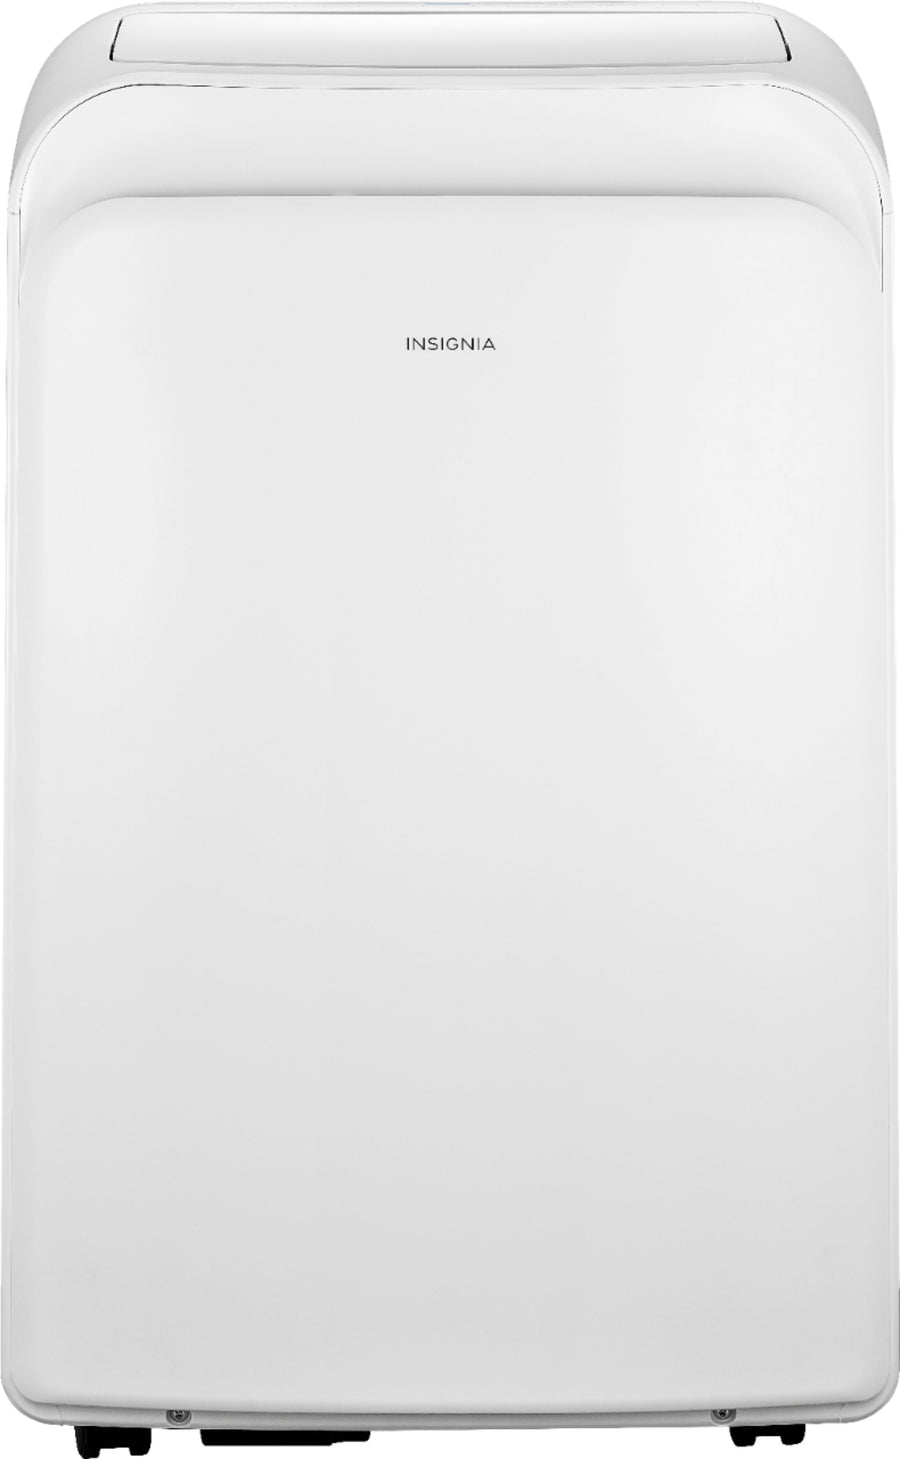 Insignia™ - 300 Sq. Ft. Portable Air Conditioner - White_0